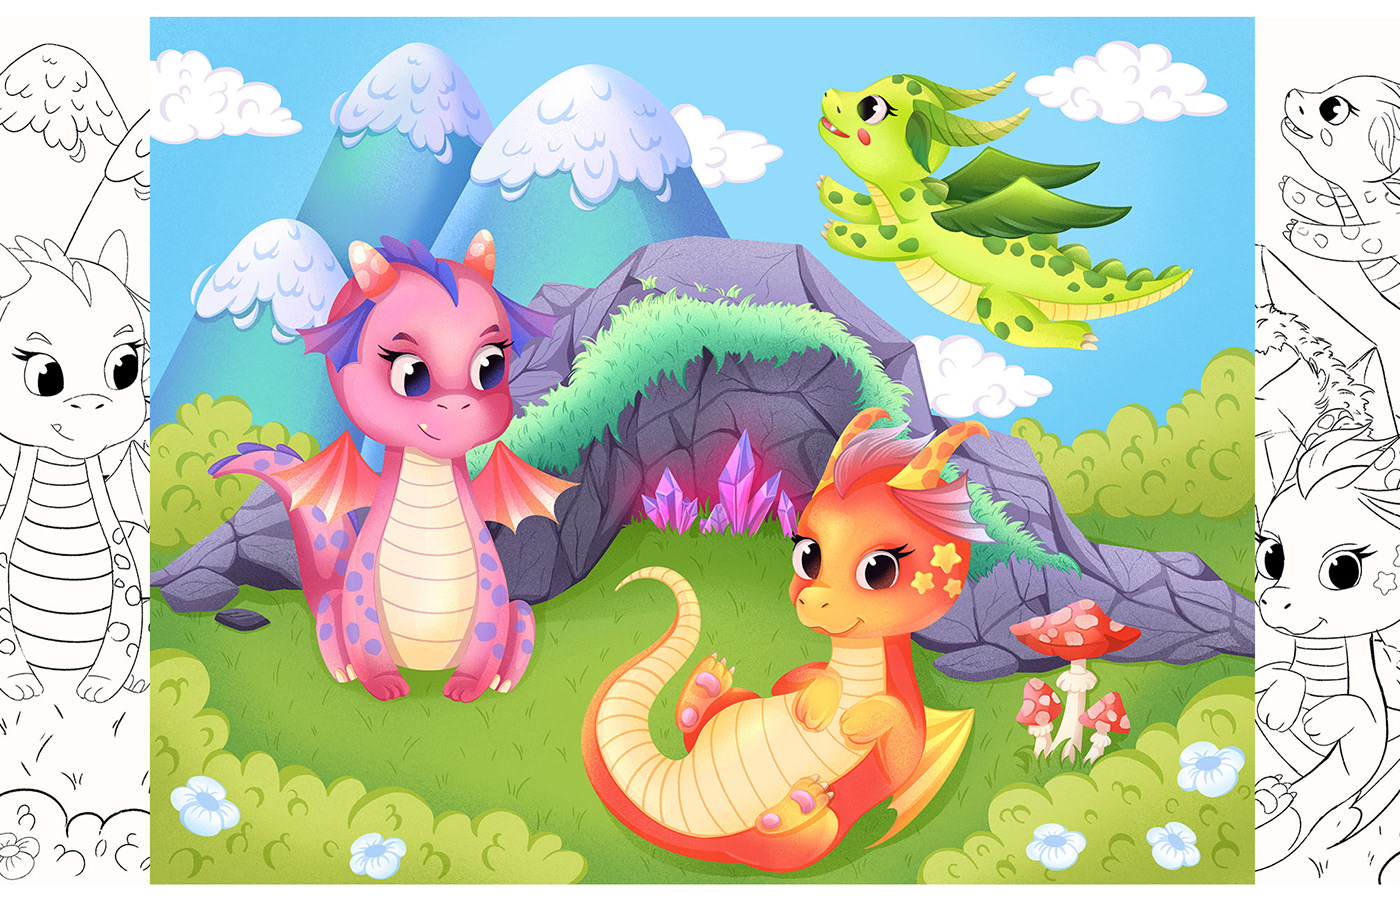 puzzles board game kids illustration unicorn princesses pirates dragon coloring book cartoon Character design 